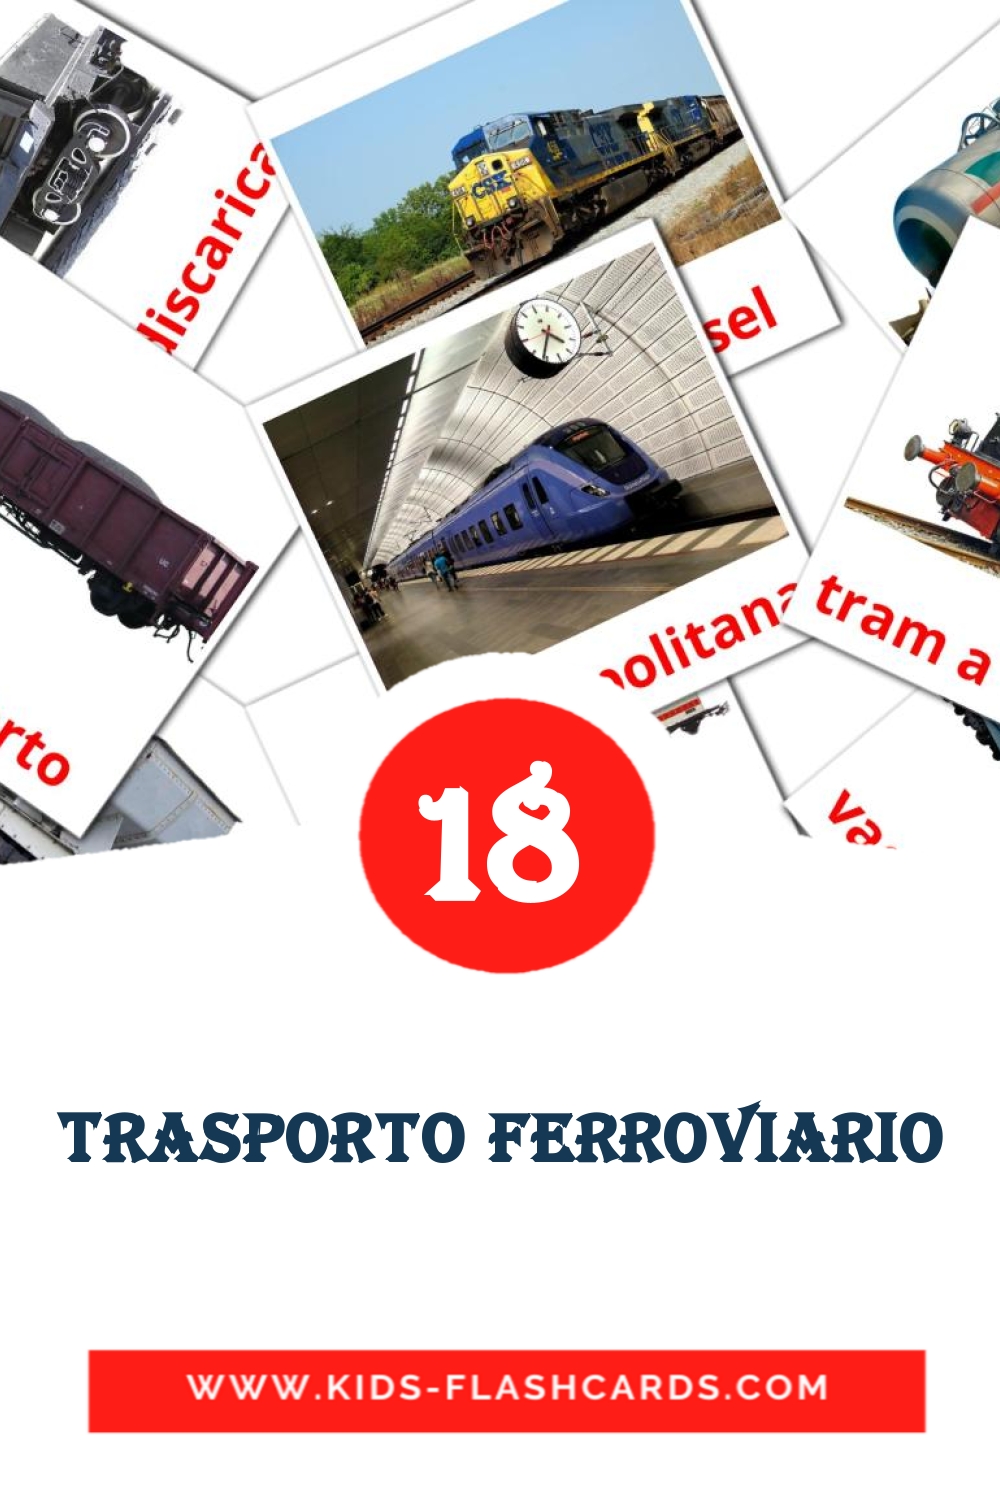 Trasporto ferroviario на итальянском для Детского Сада (18 карточек)